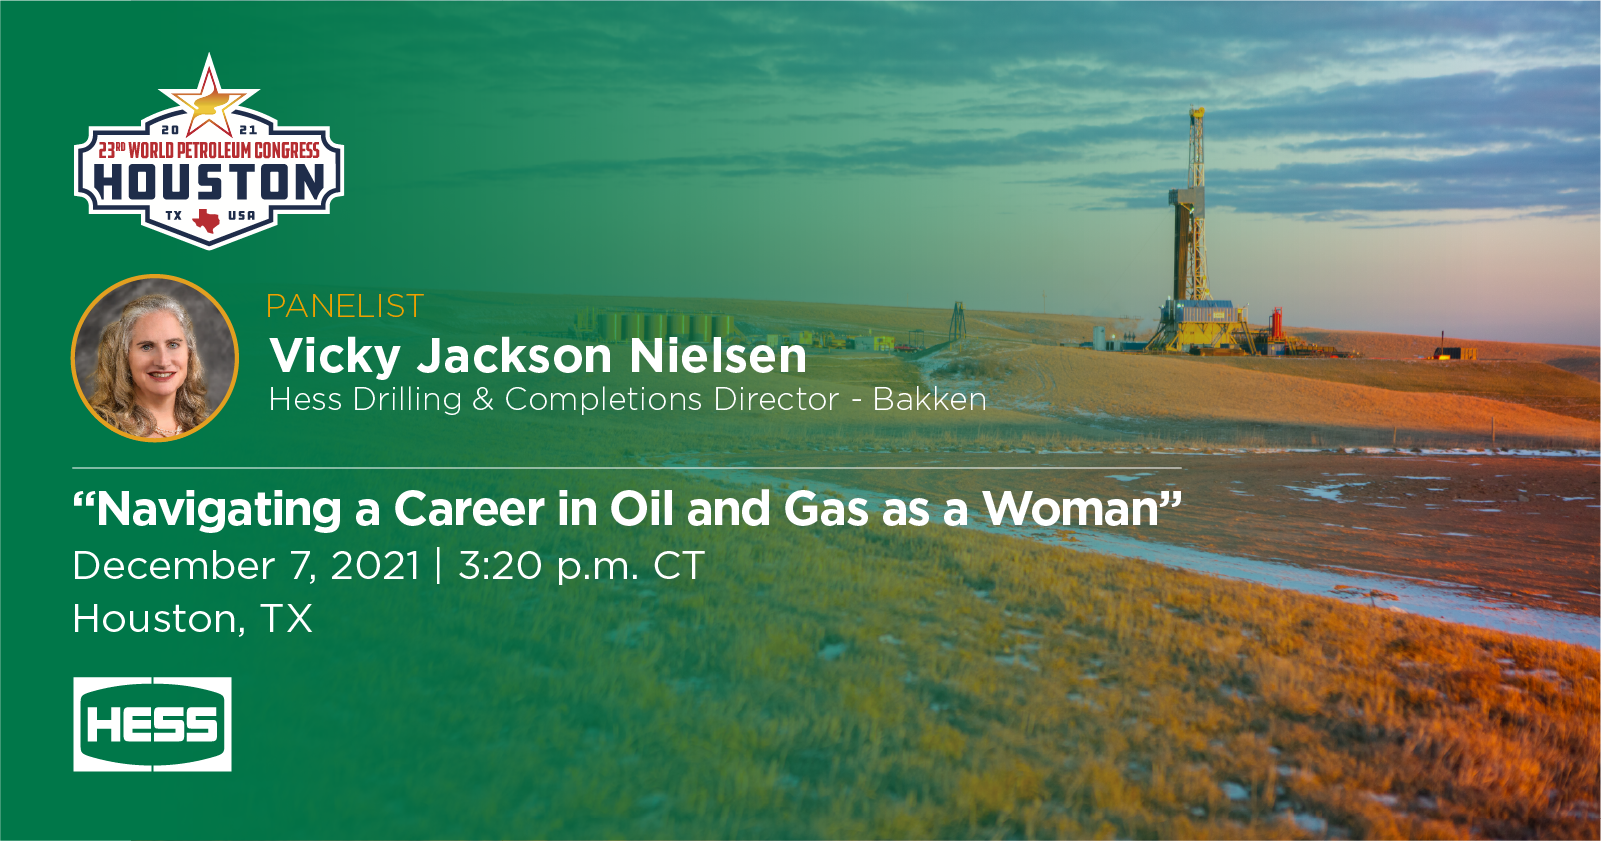 World Petroleum Congress Vicky Jackson Nielsen